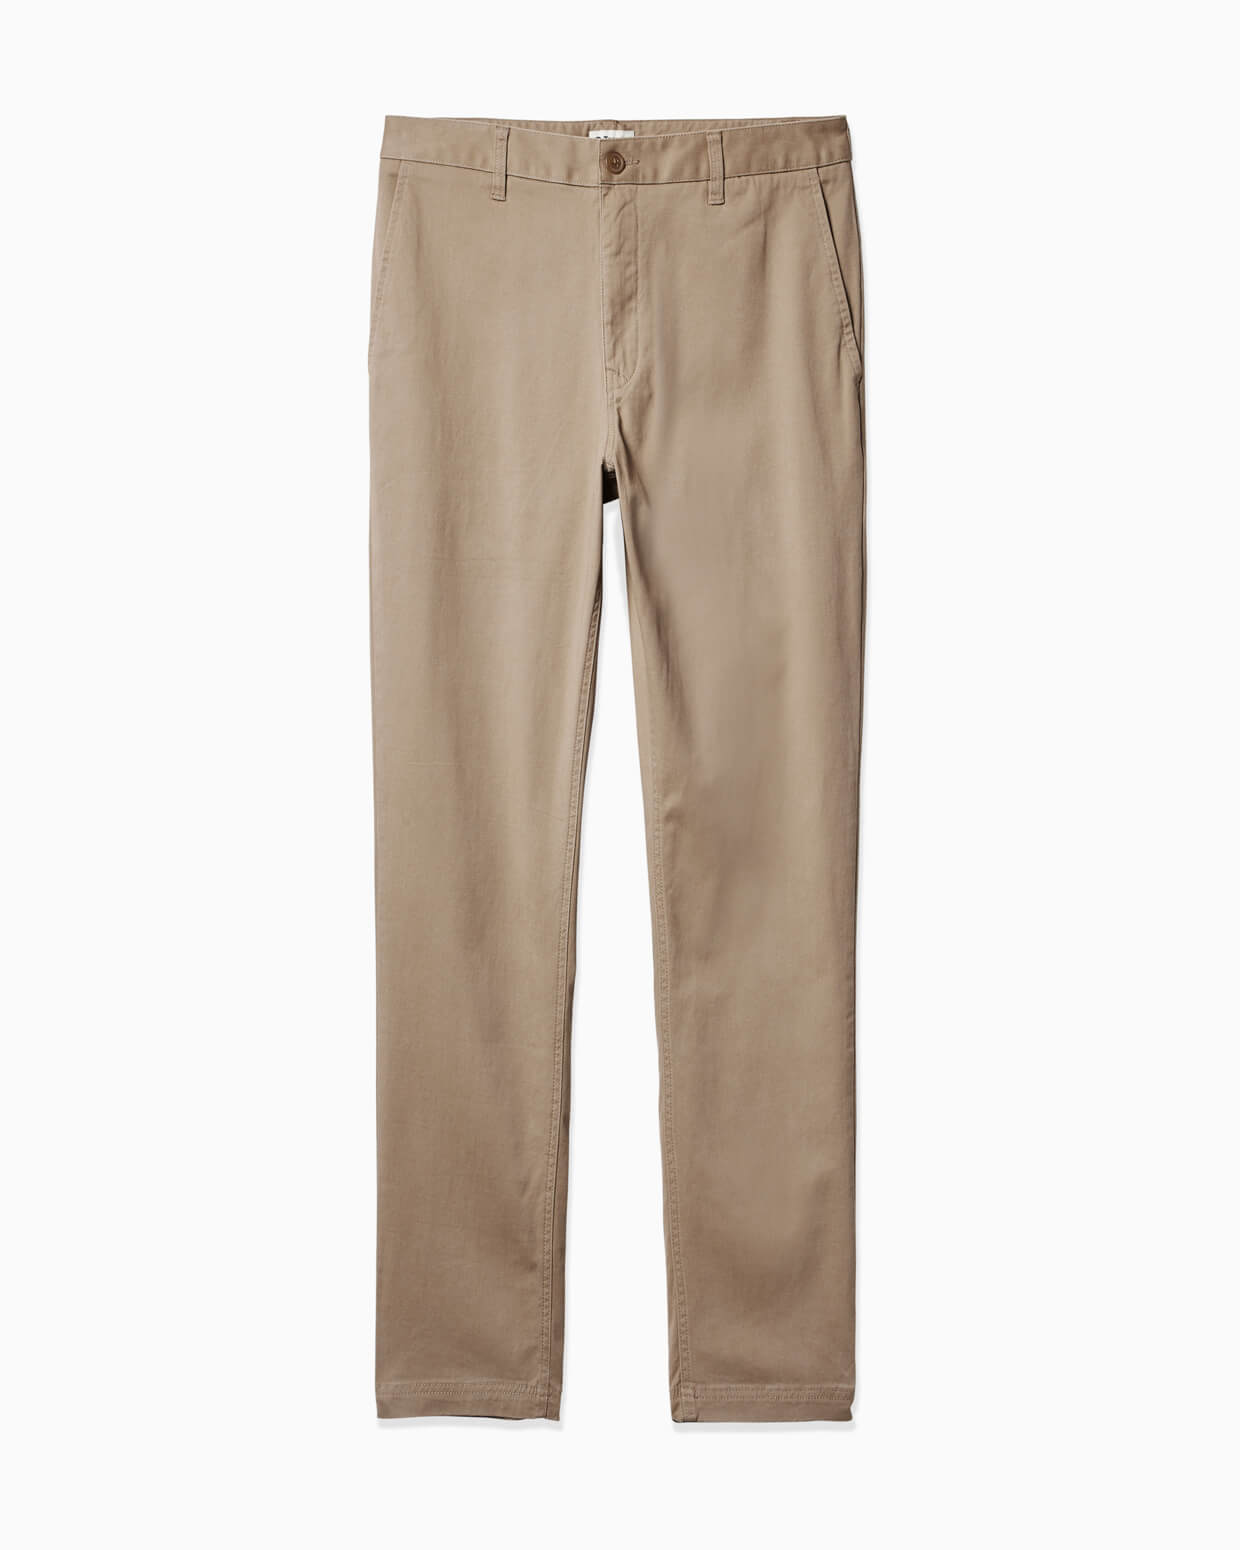 Men's Chino Pants - Durable Everyday Pants